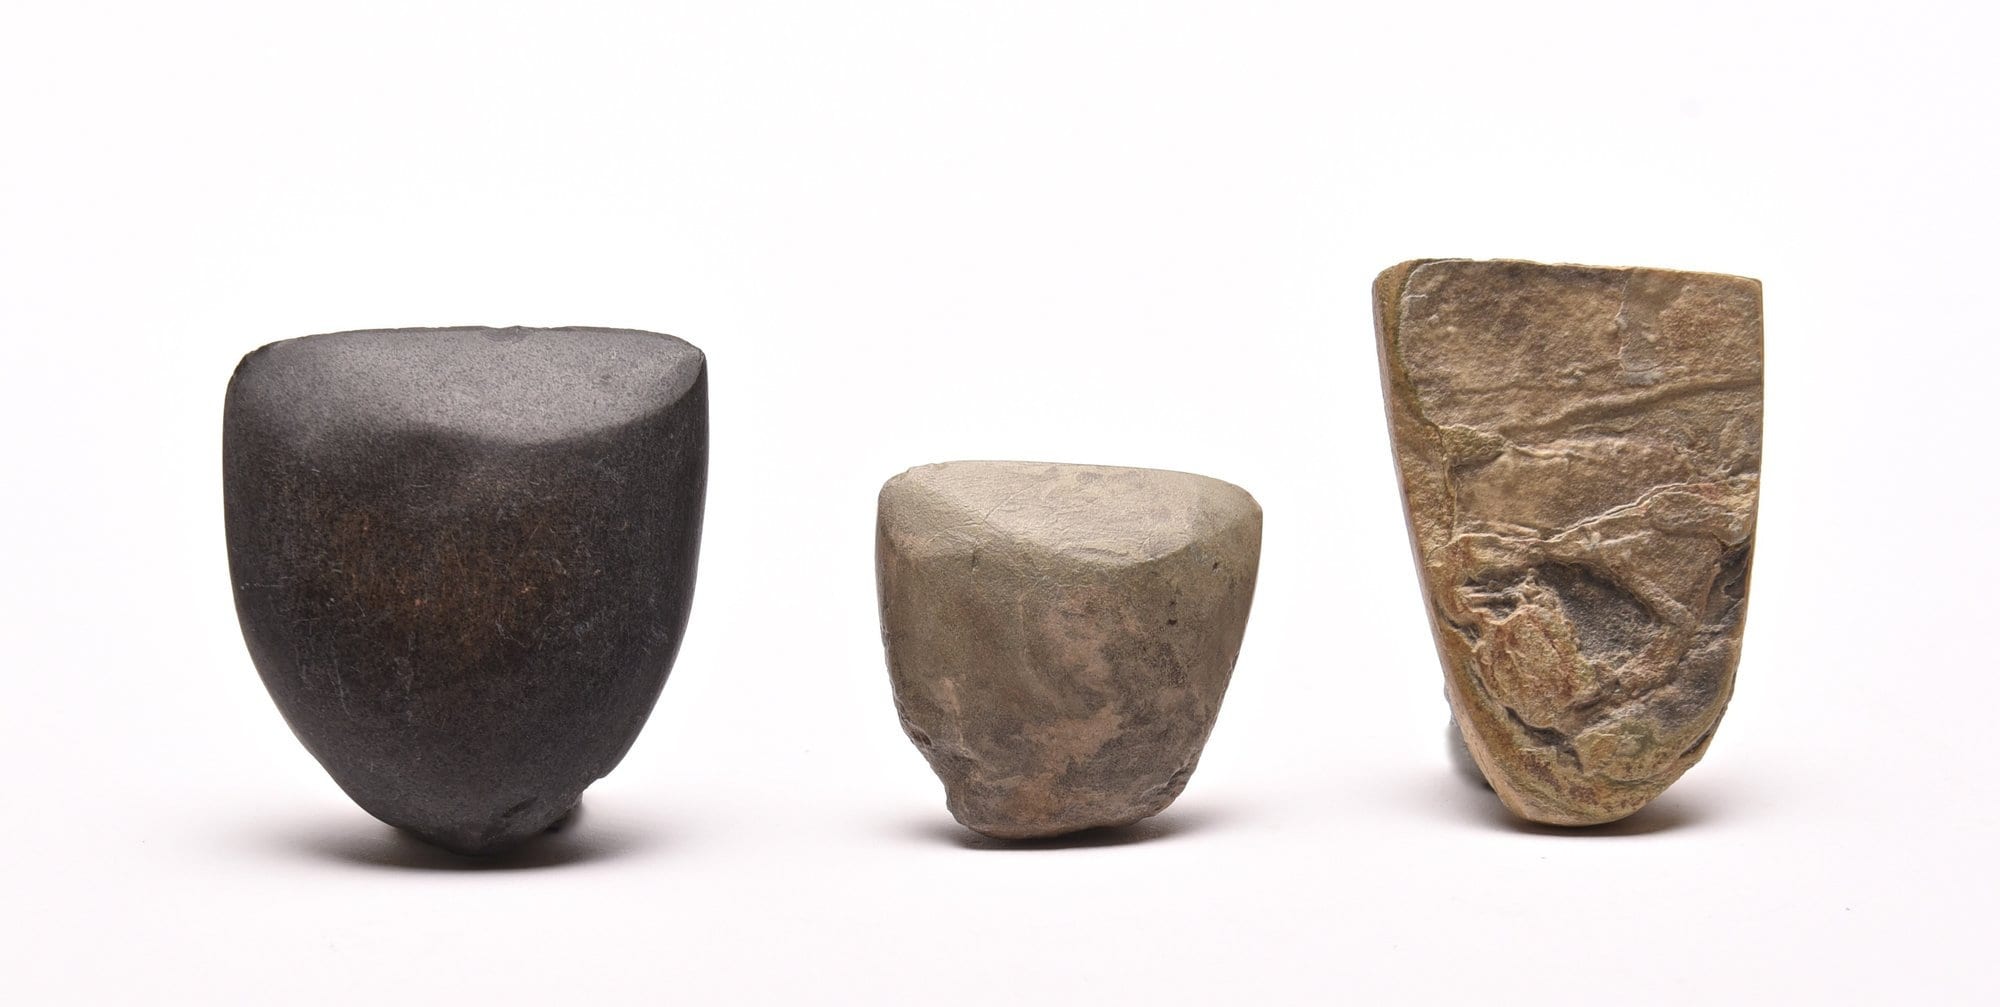 Genuine Neolithic 3 Polished Axes | Basalt Dolerite Bluestone | 51×36 45x37mm | 4000-6000 BCE | Natural History Specimen